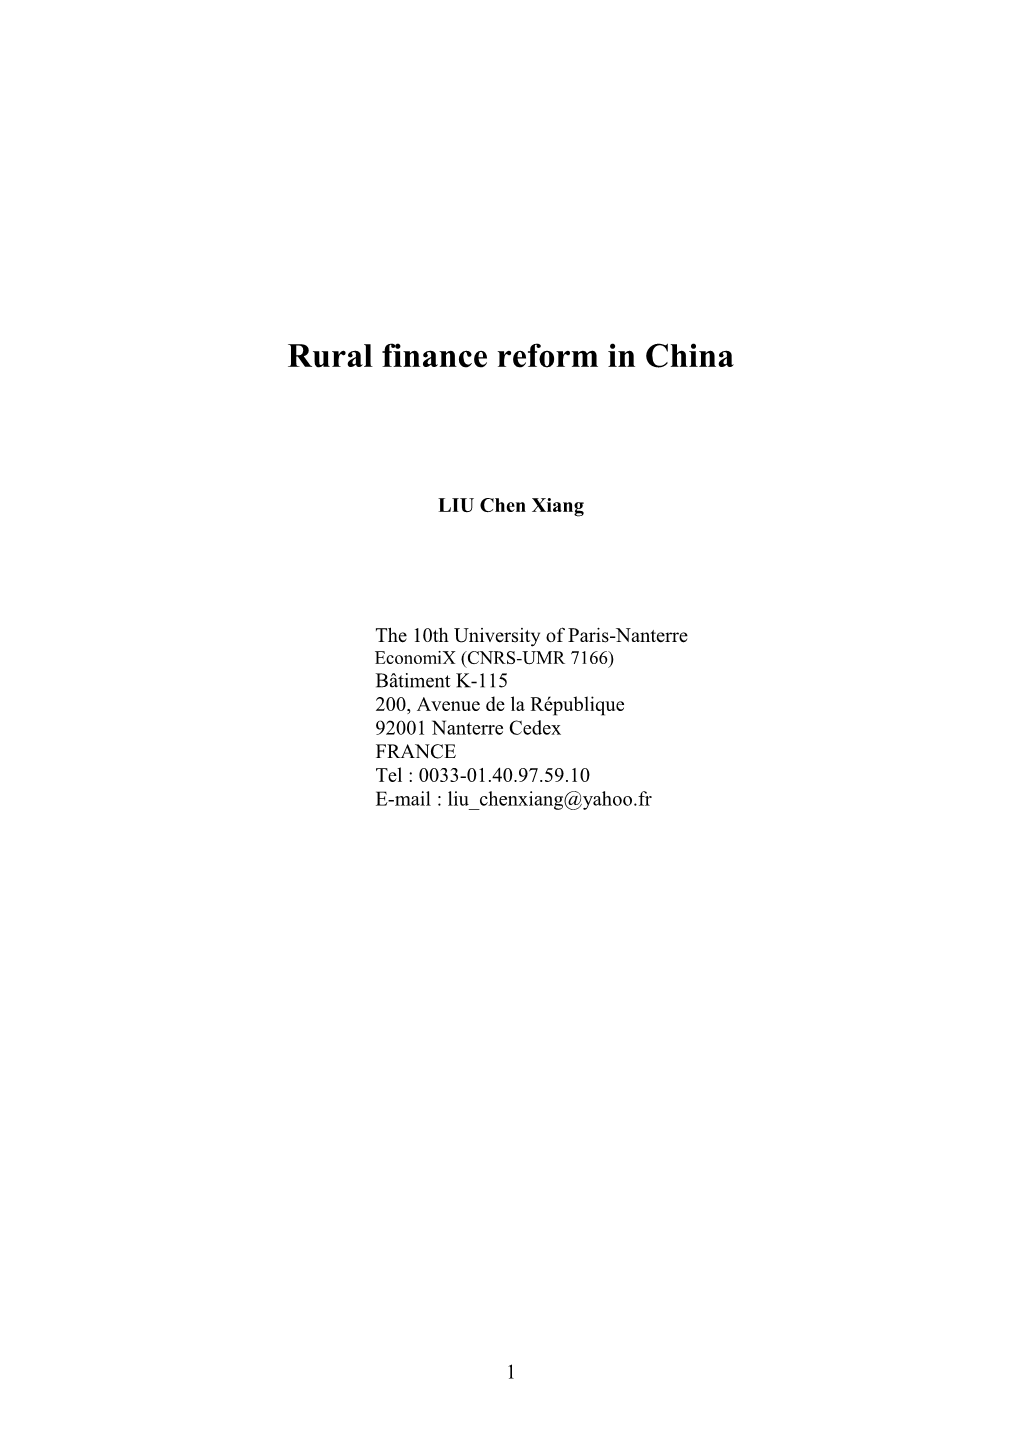 Chinese Rural Finance Reform